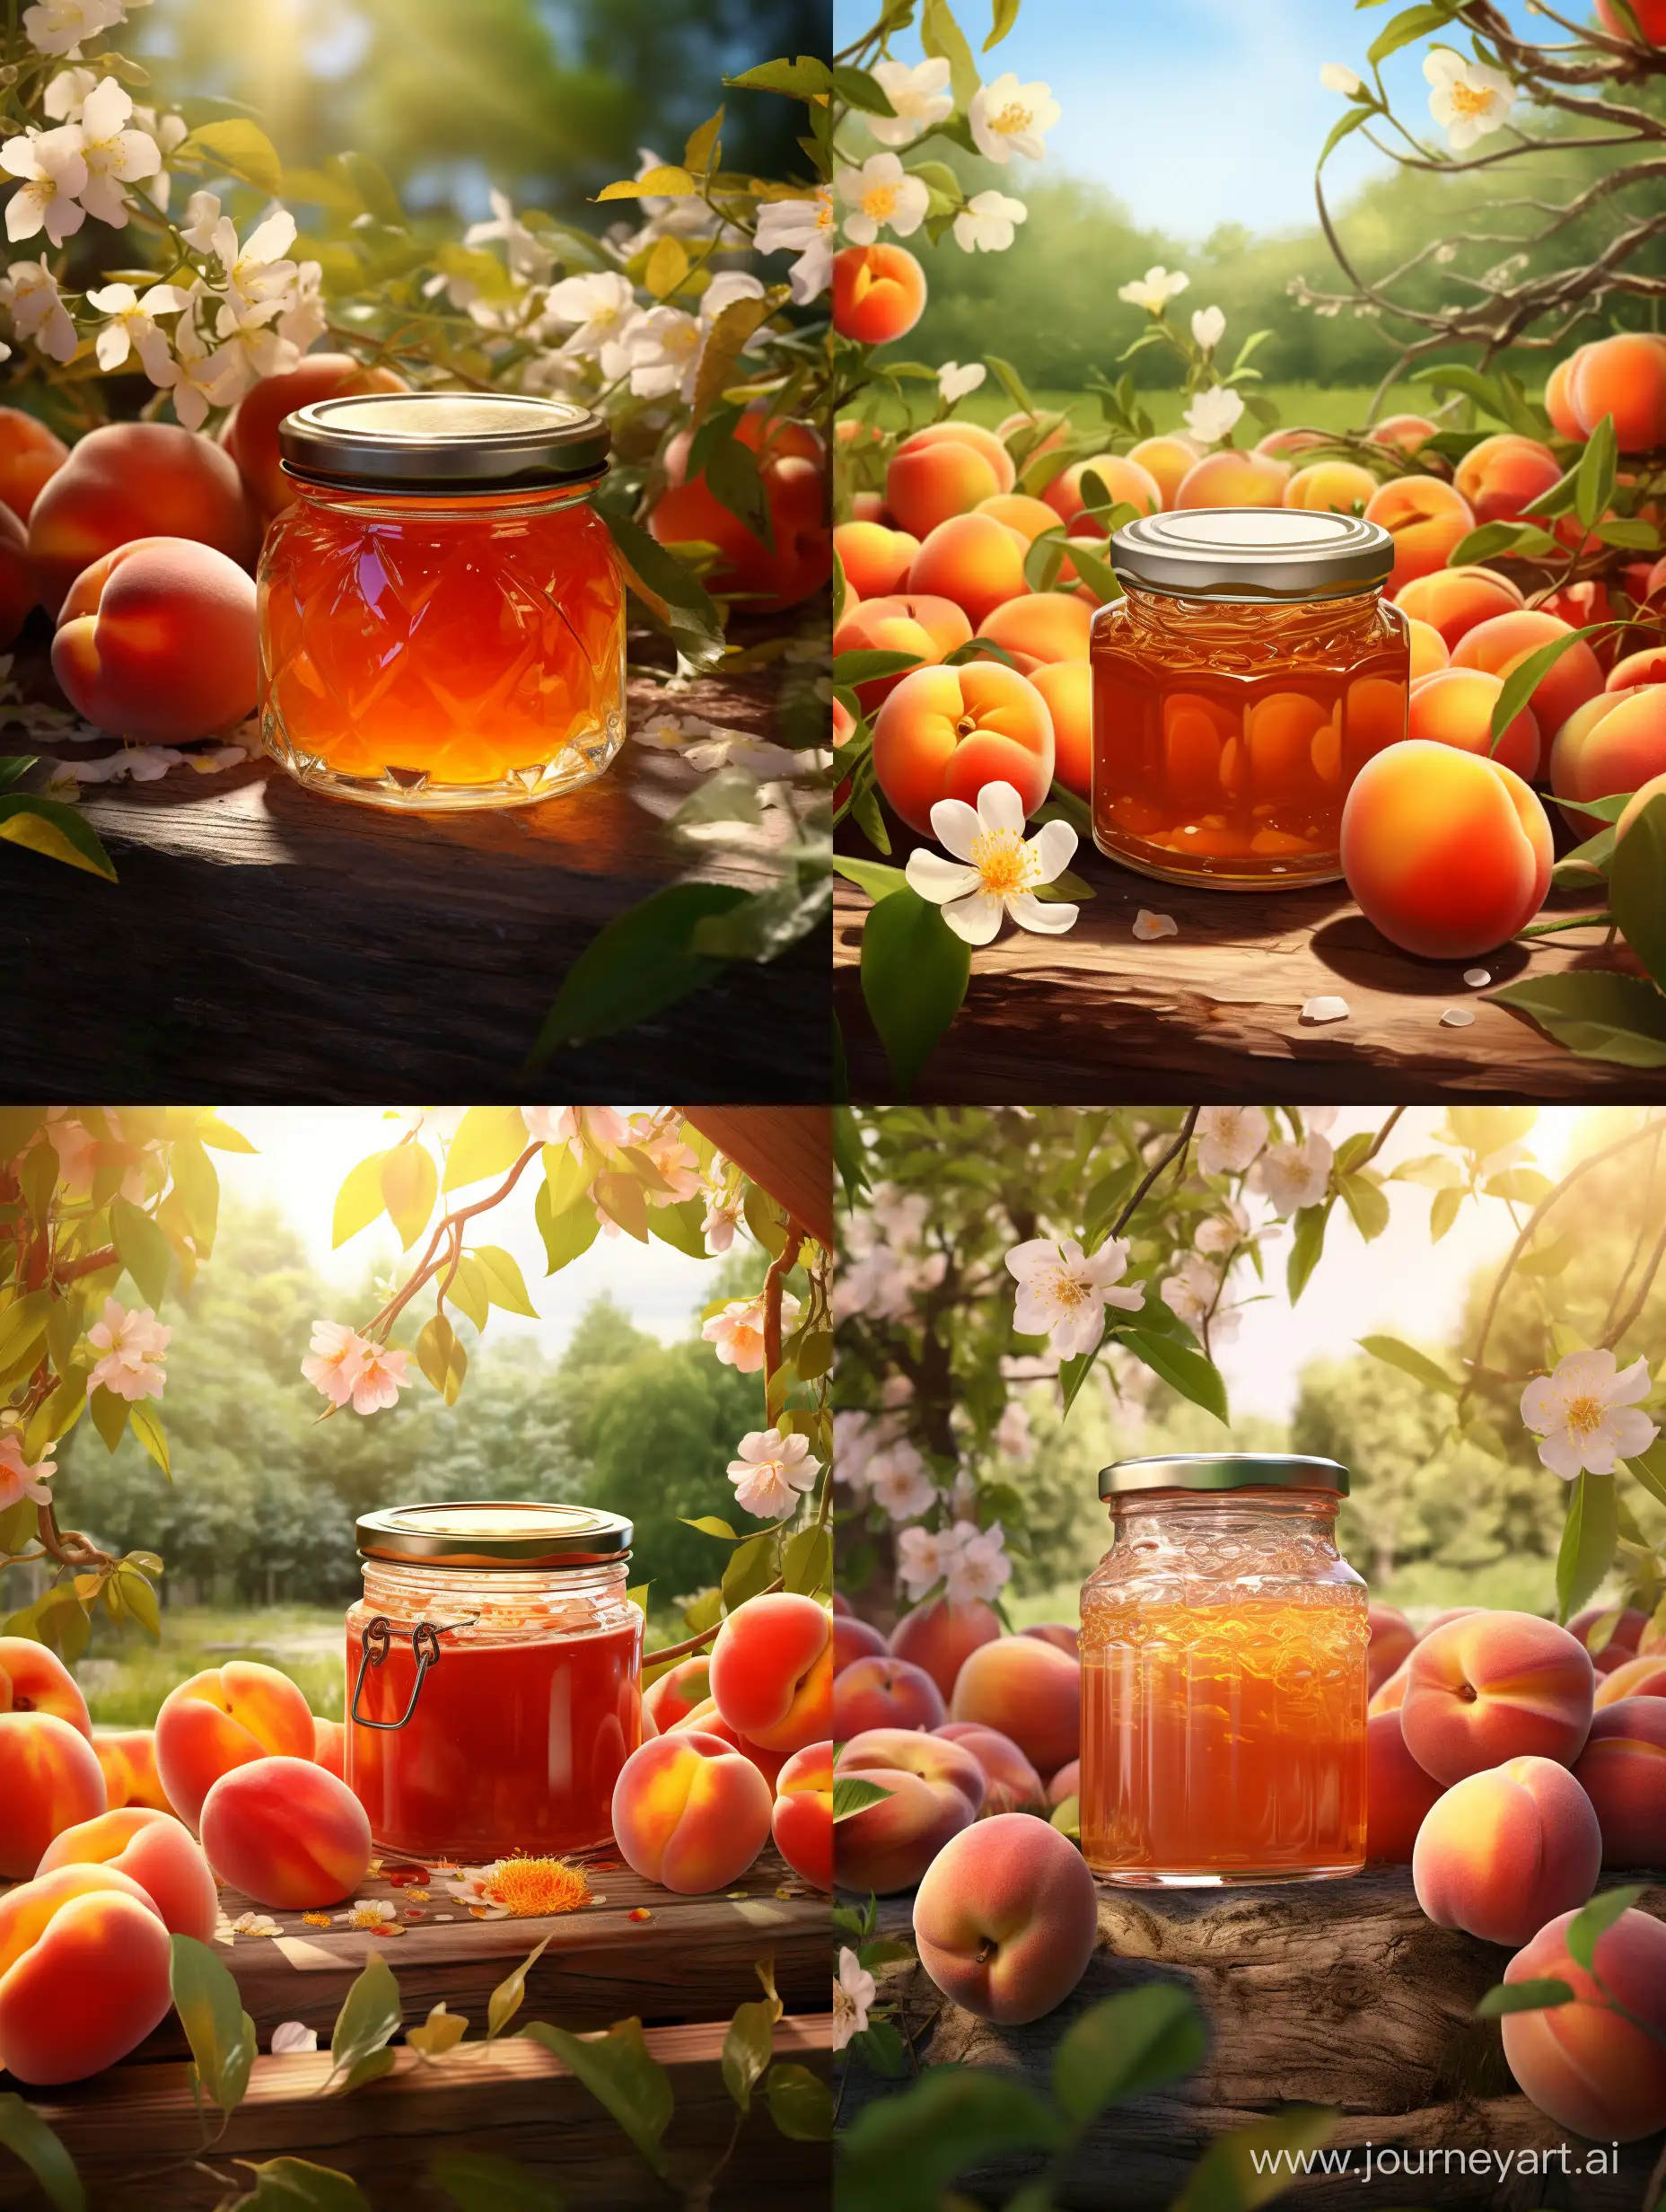 Premium-Peach-Jam-Jar-in-Lush-Garden-Setting